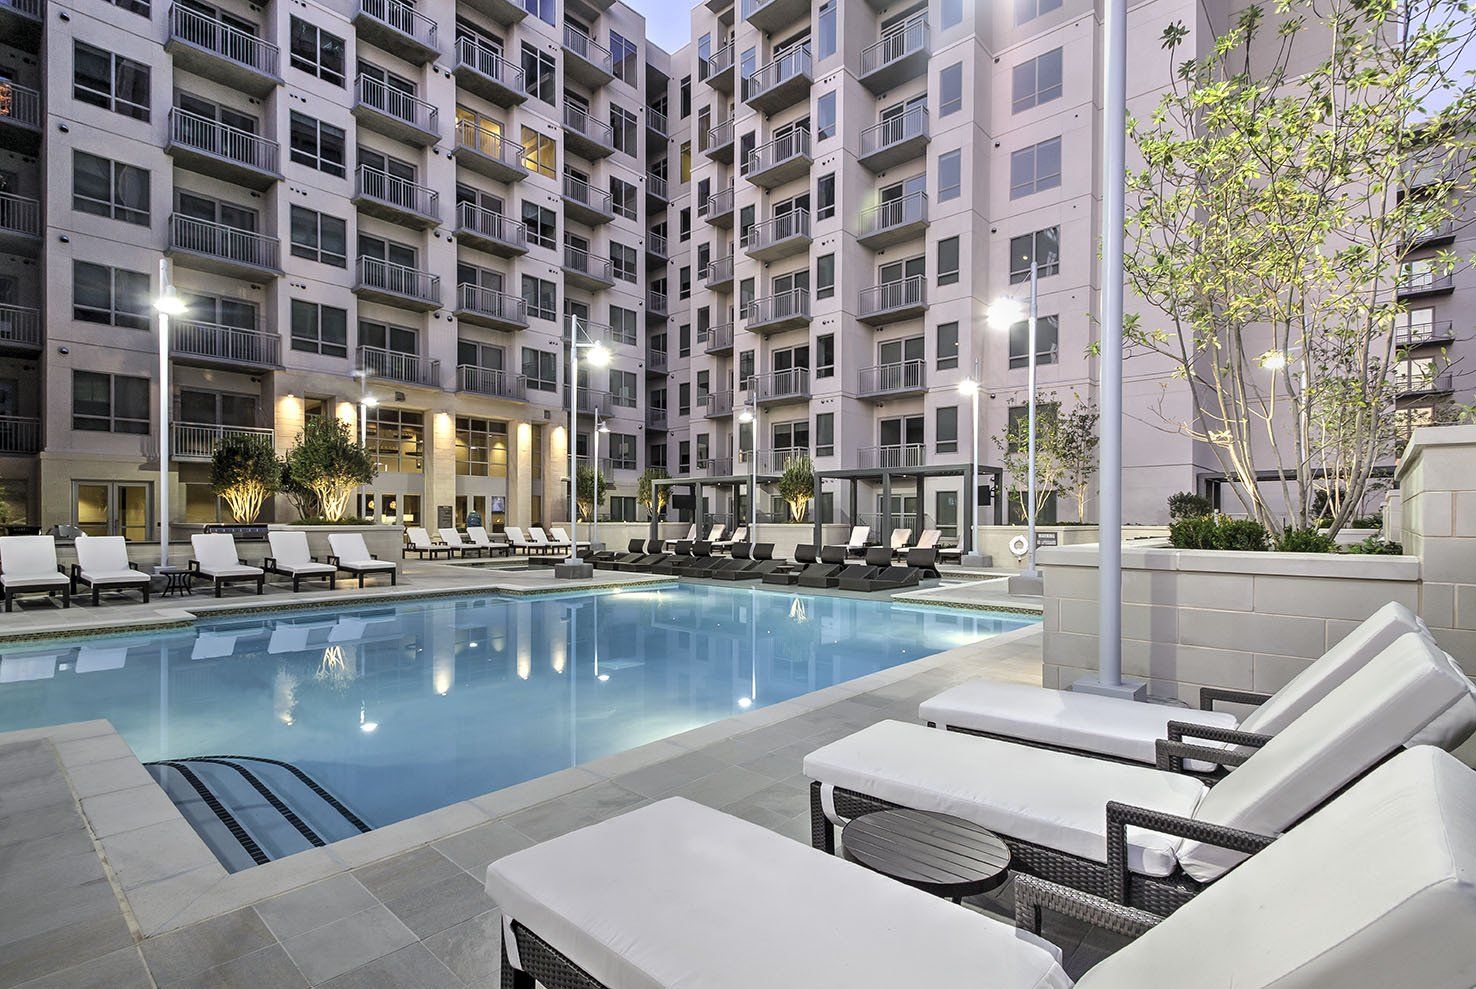 Trace Midtown Luxury HighRise Apartments in Atlanta, GA